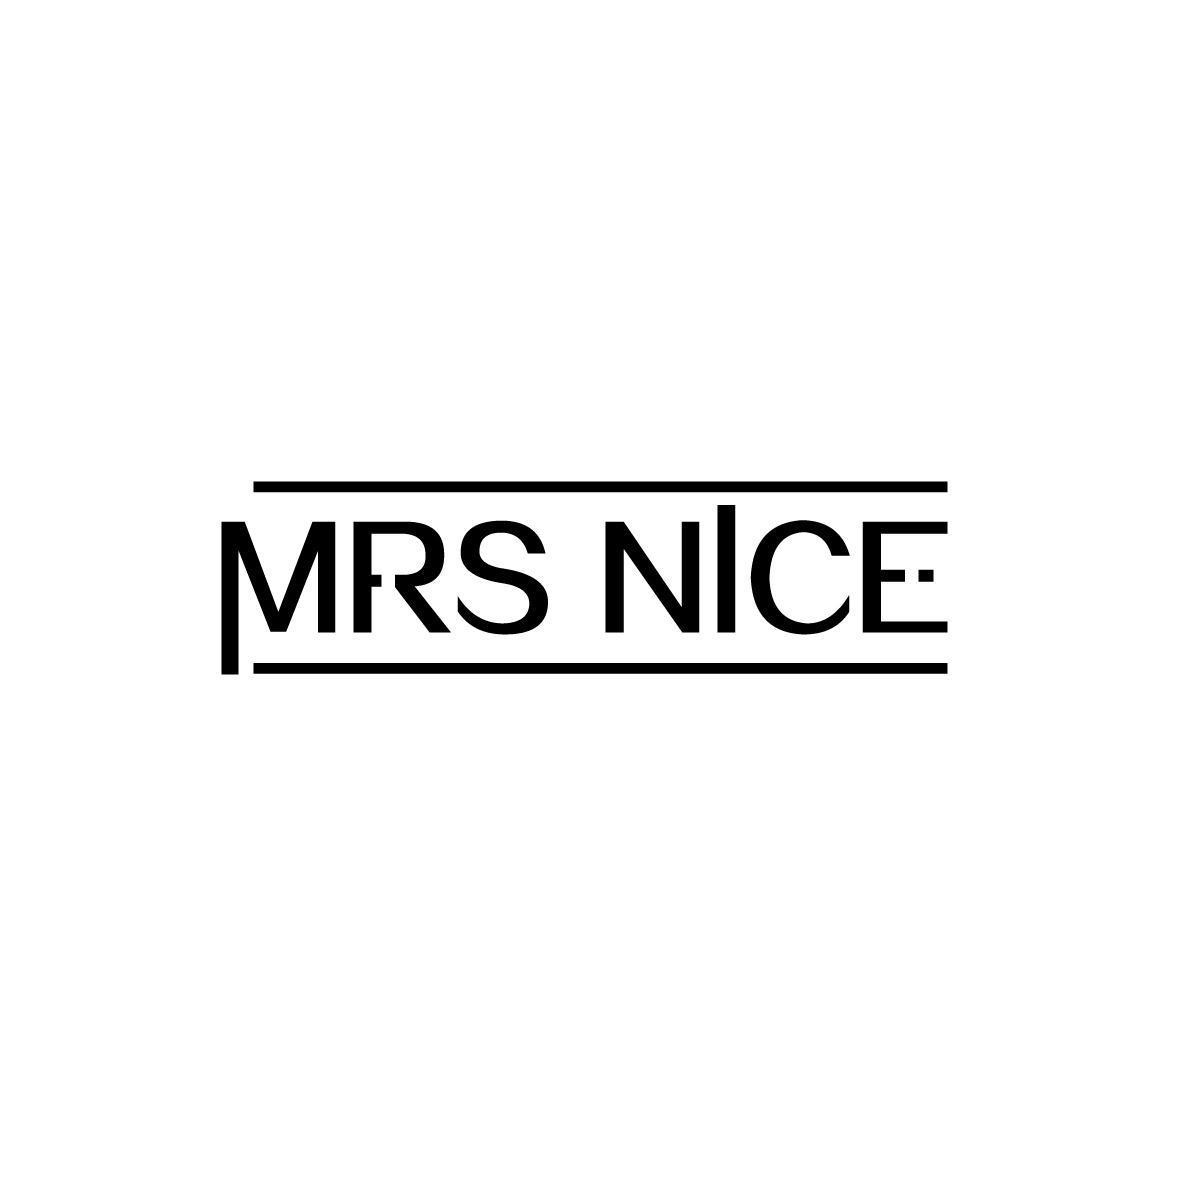 MRS NICE